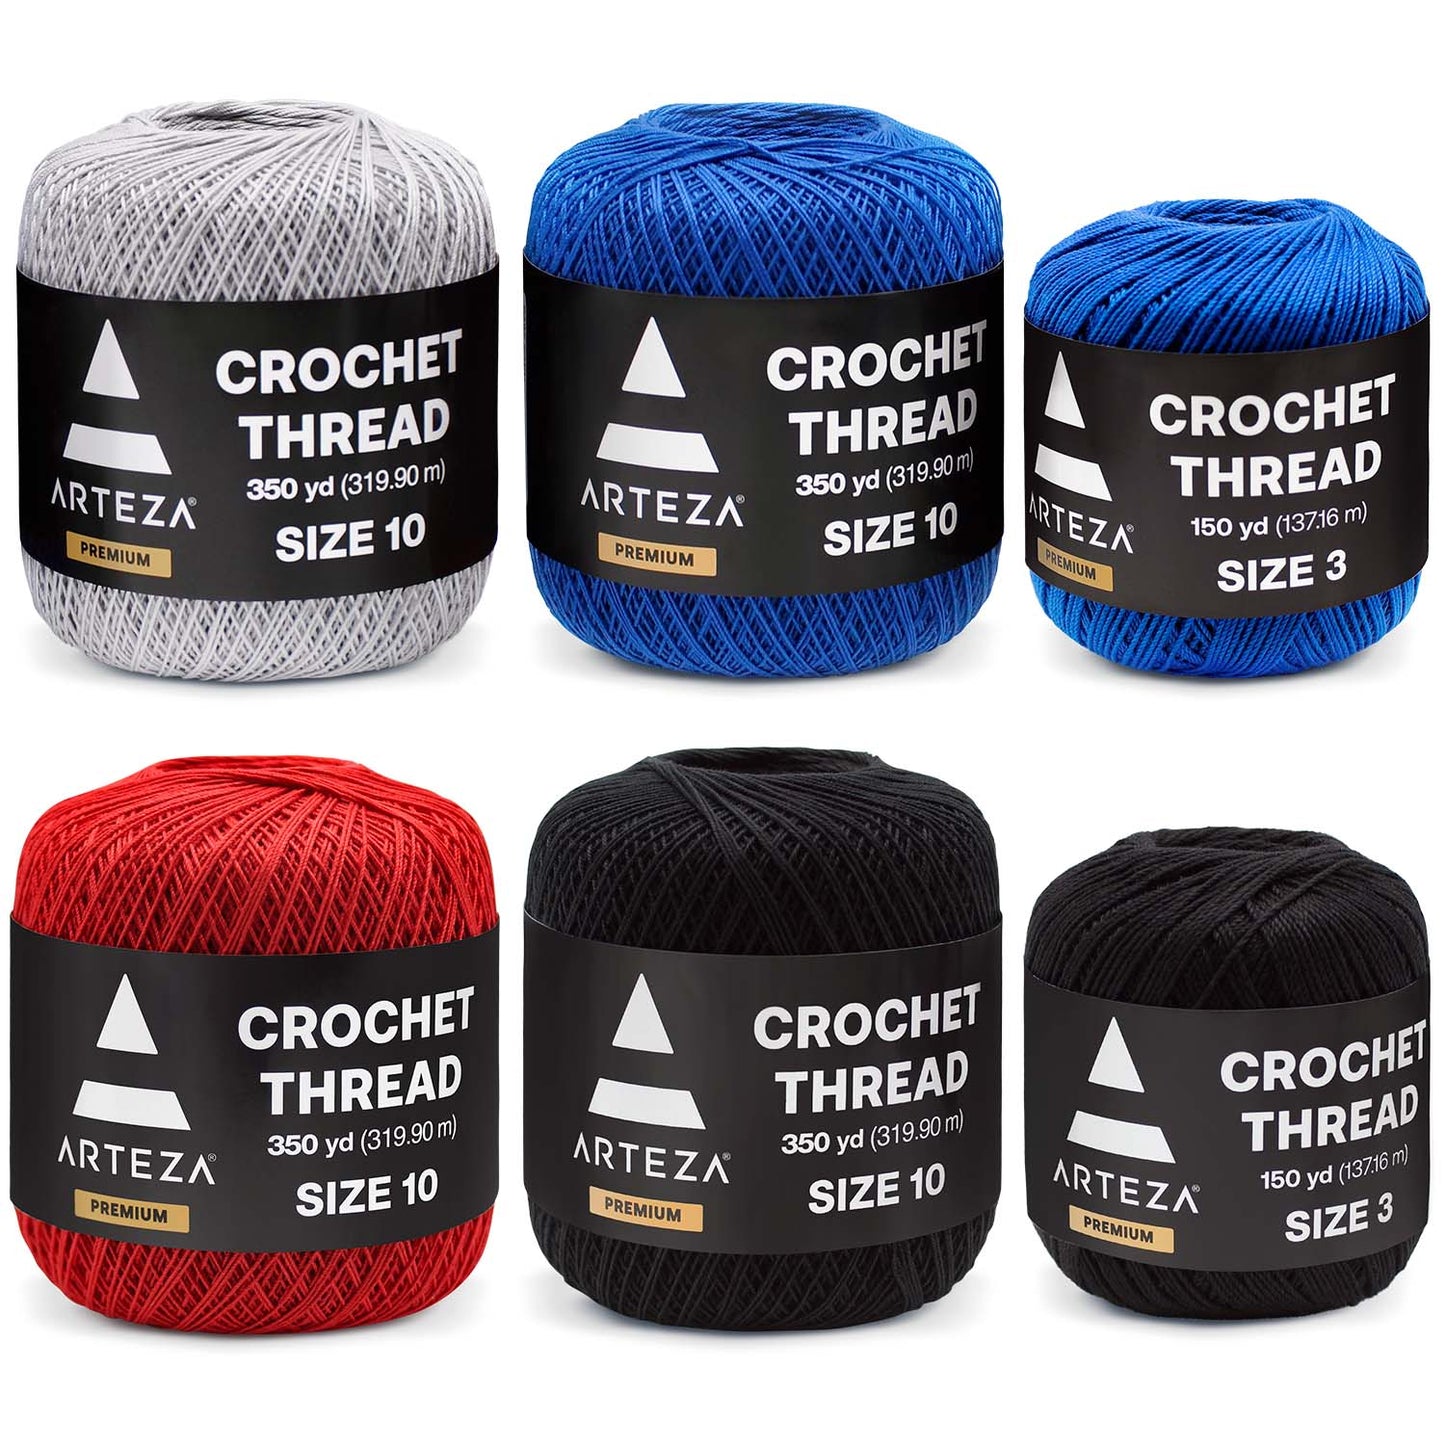 Crochet tips for black/dark yarn 